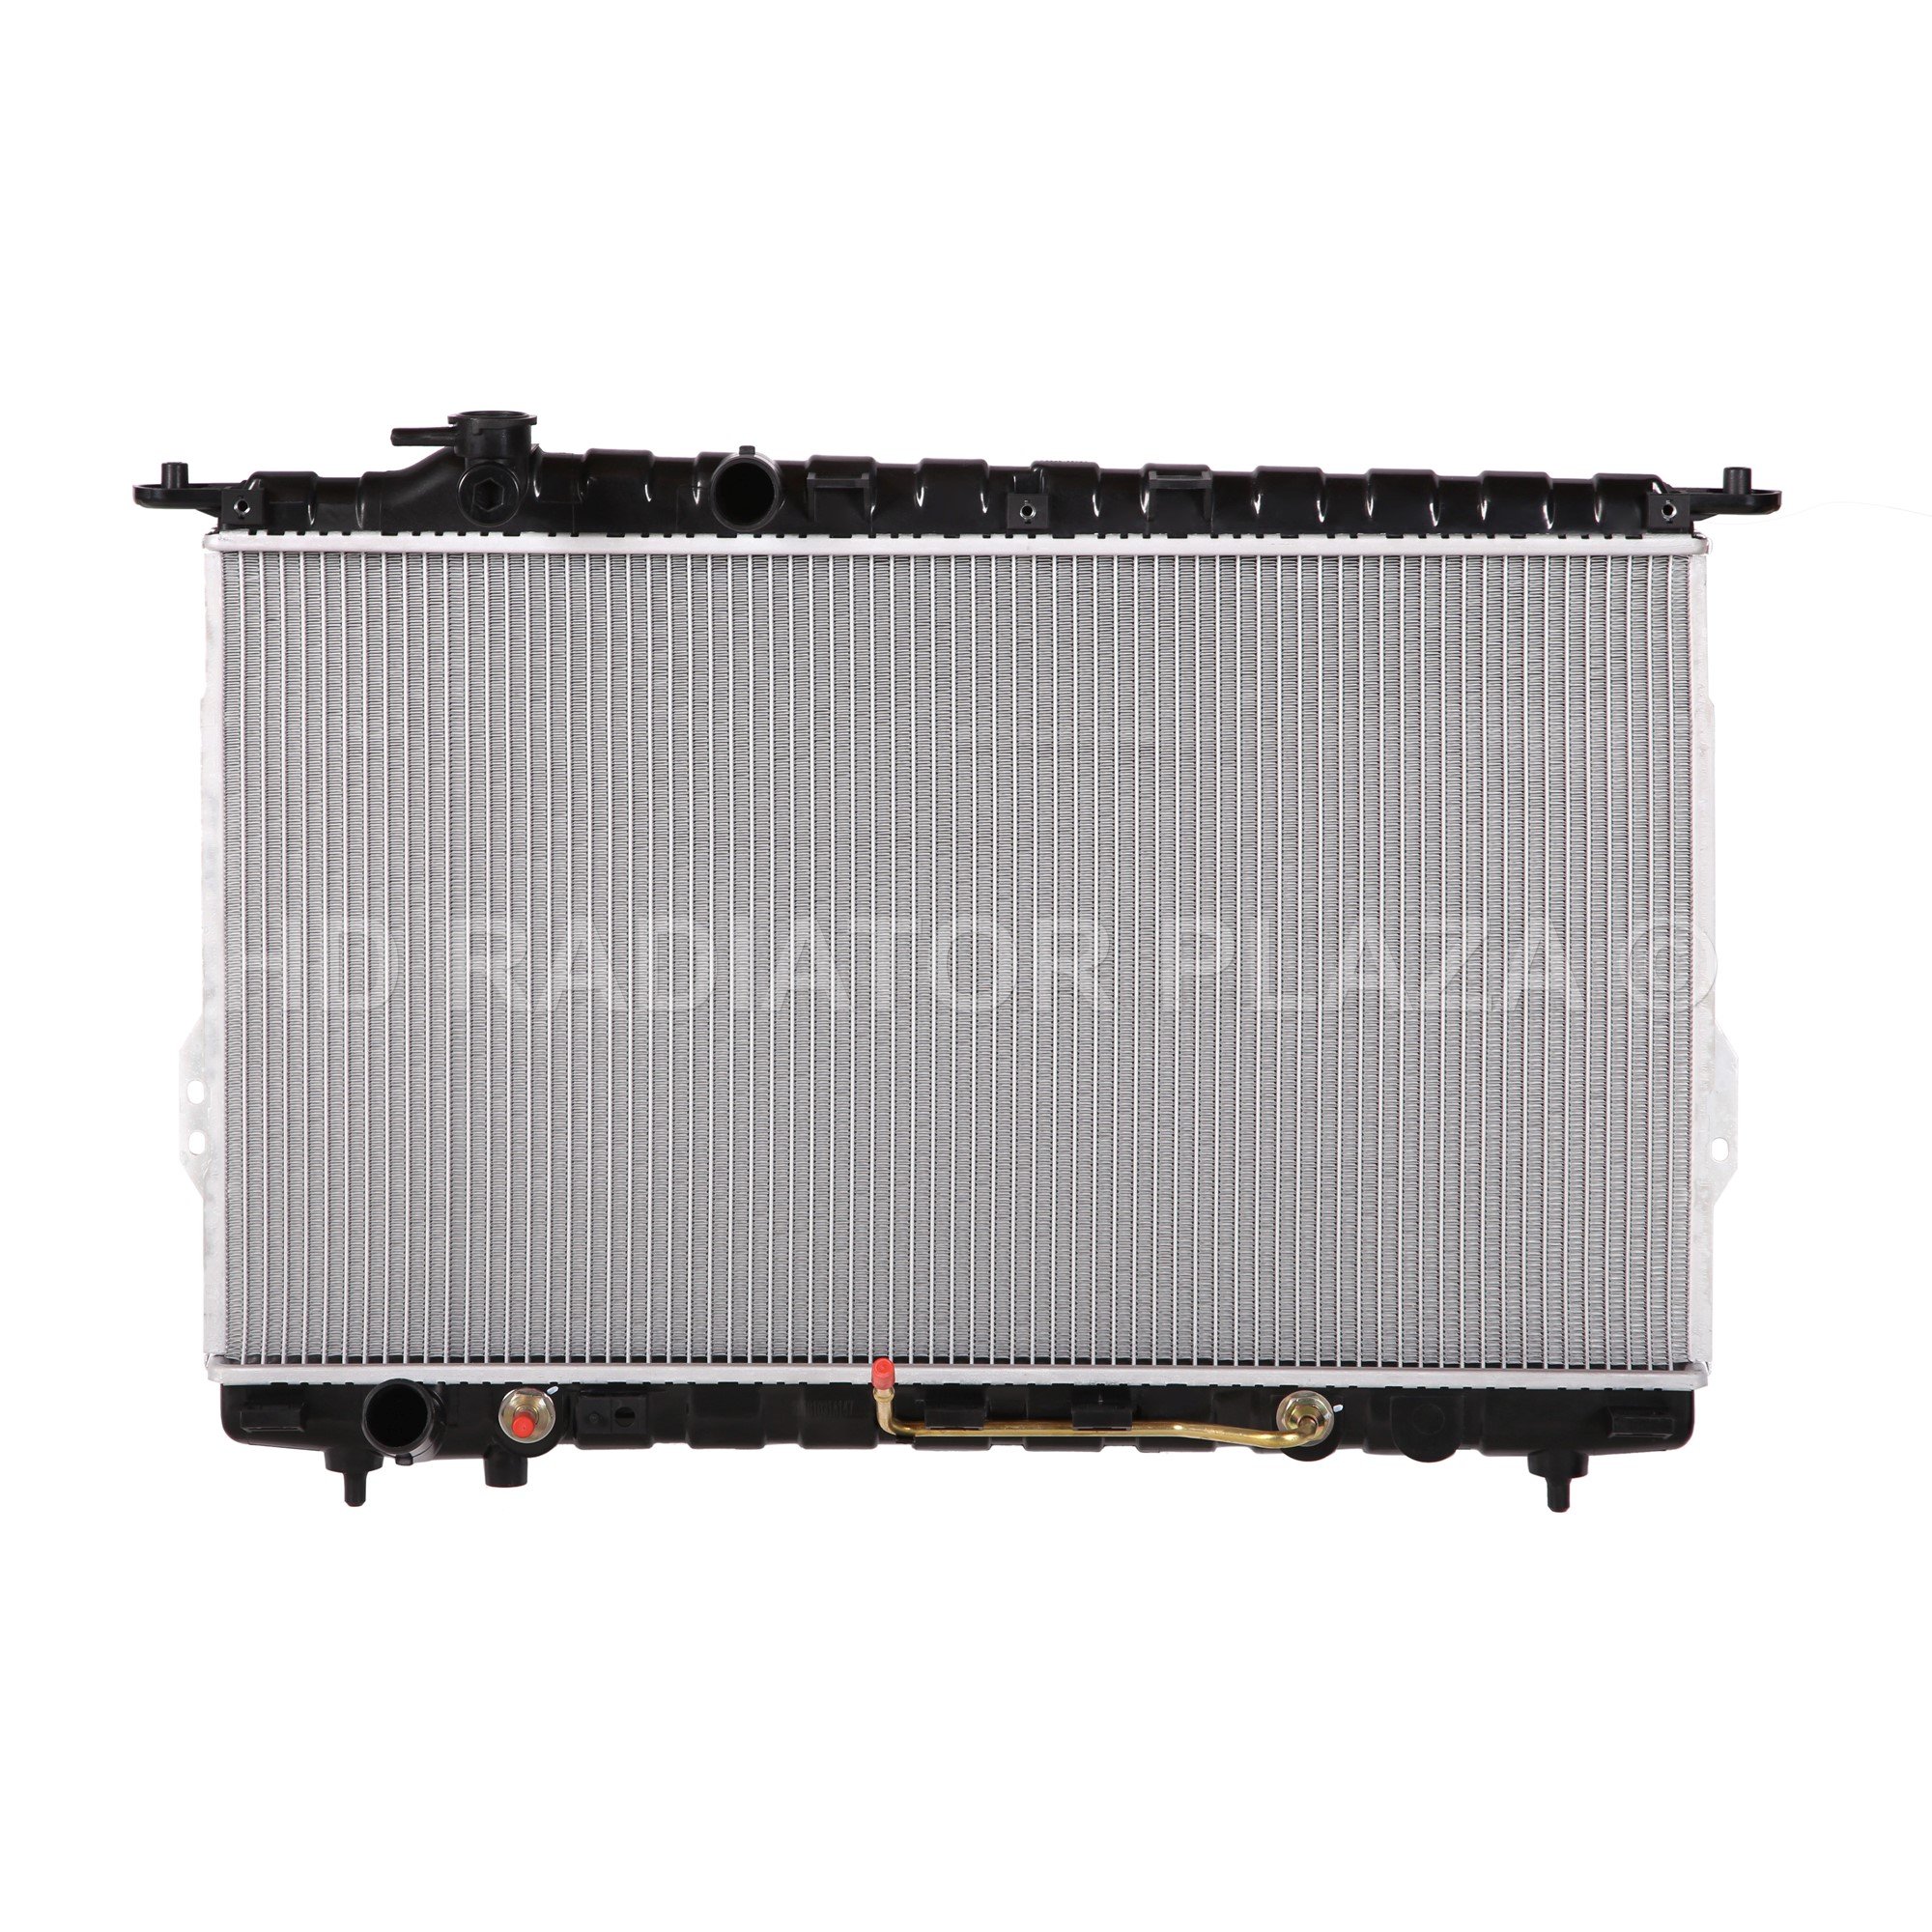 Radiator for 99-06 Sonata / Optima